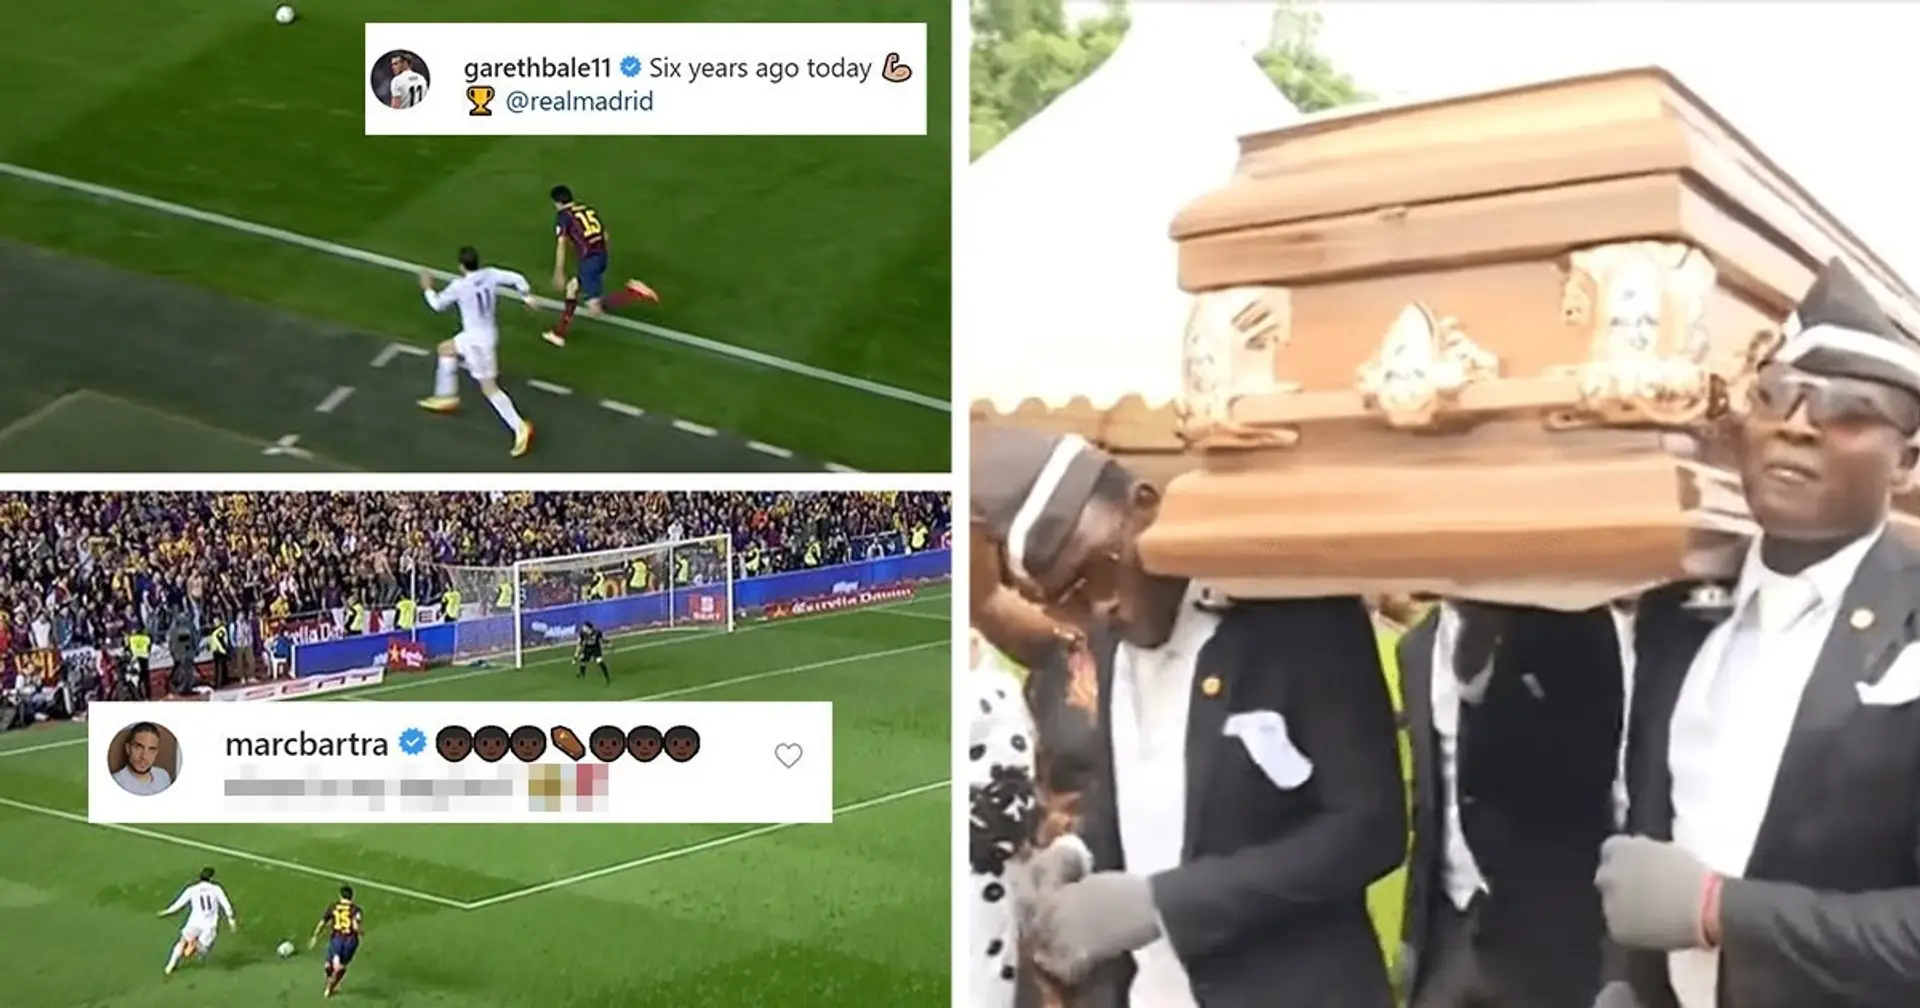 Marc Bartra hijacks Gareth Bale's Instagram celebration with a funny message